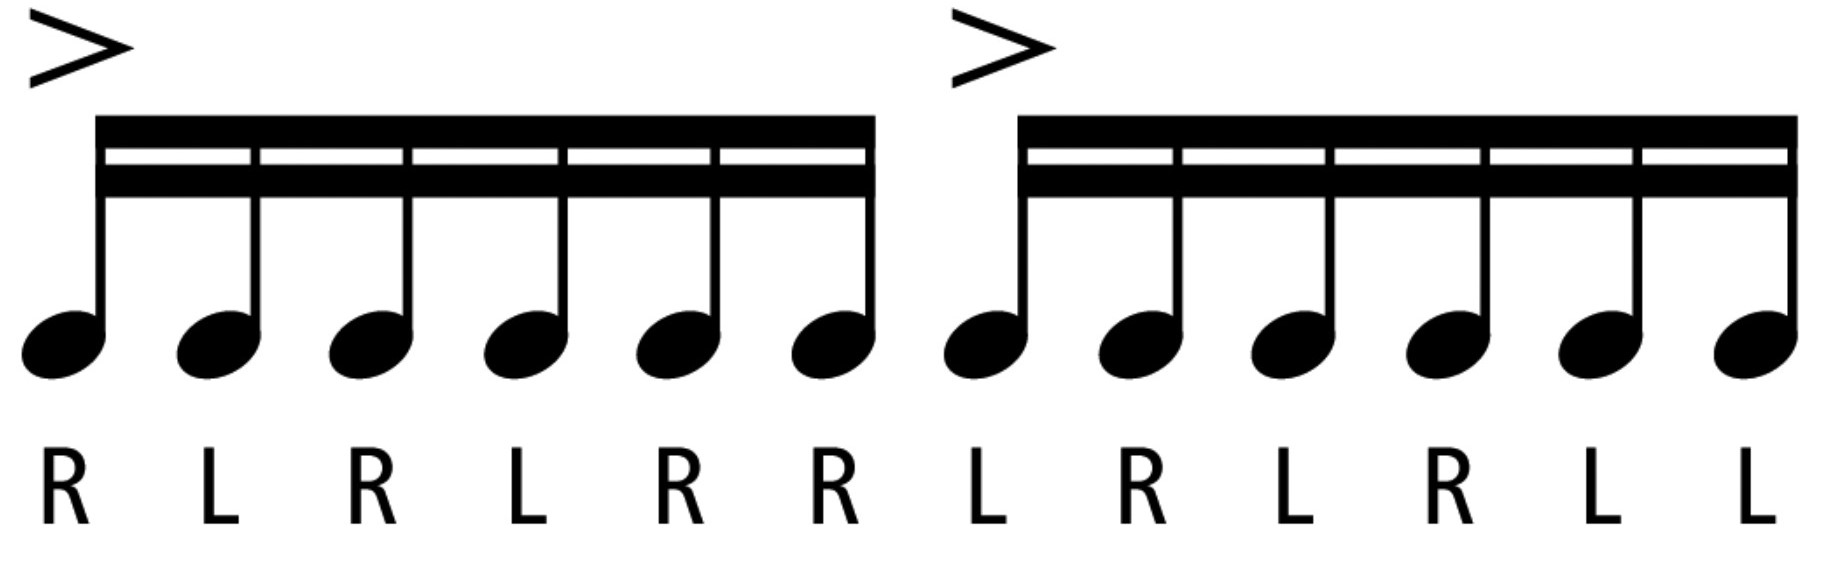 music notation2